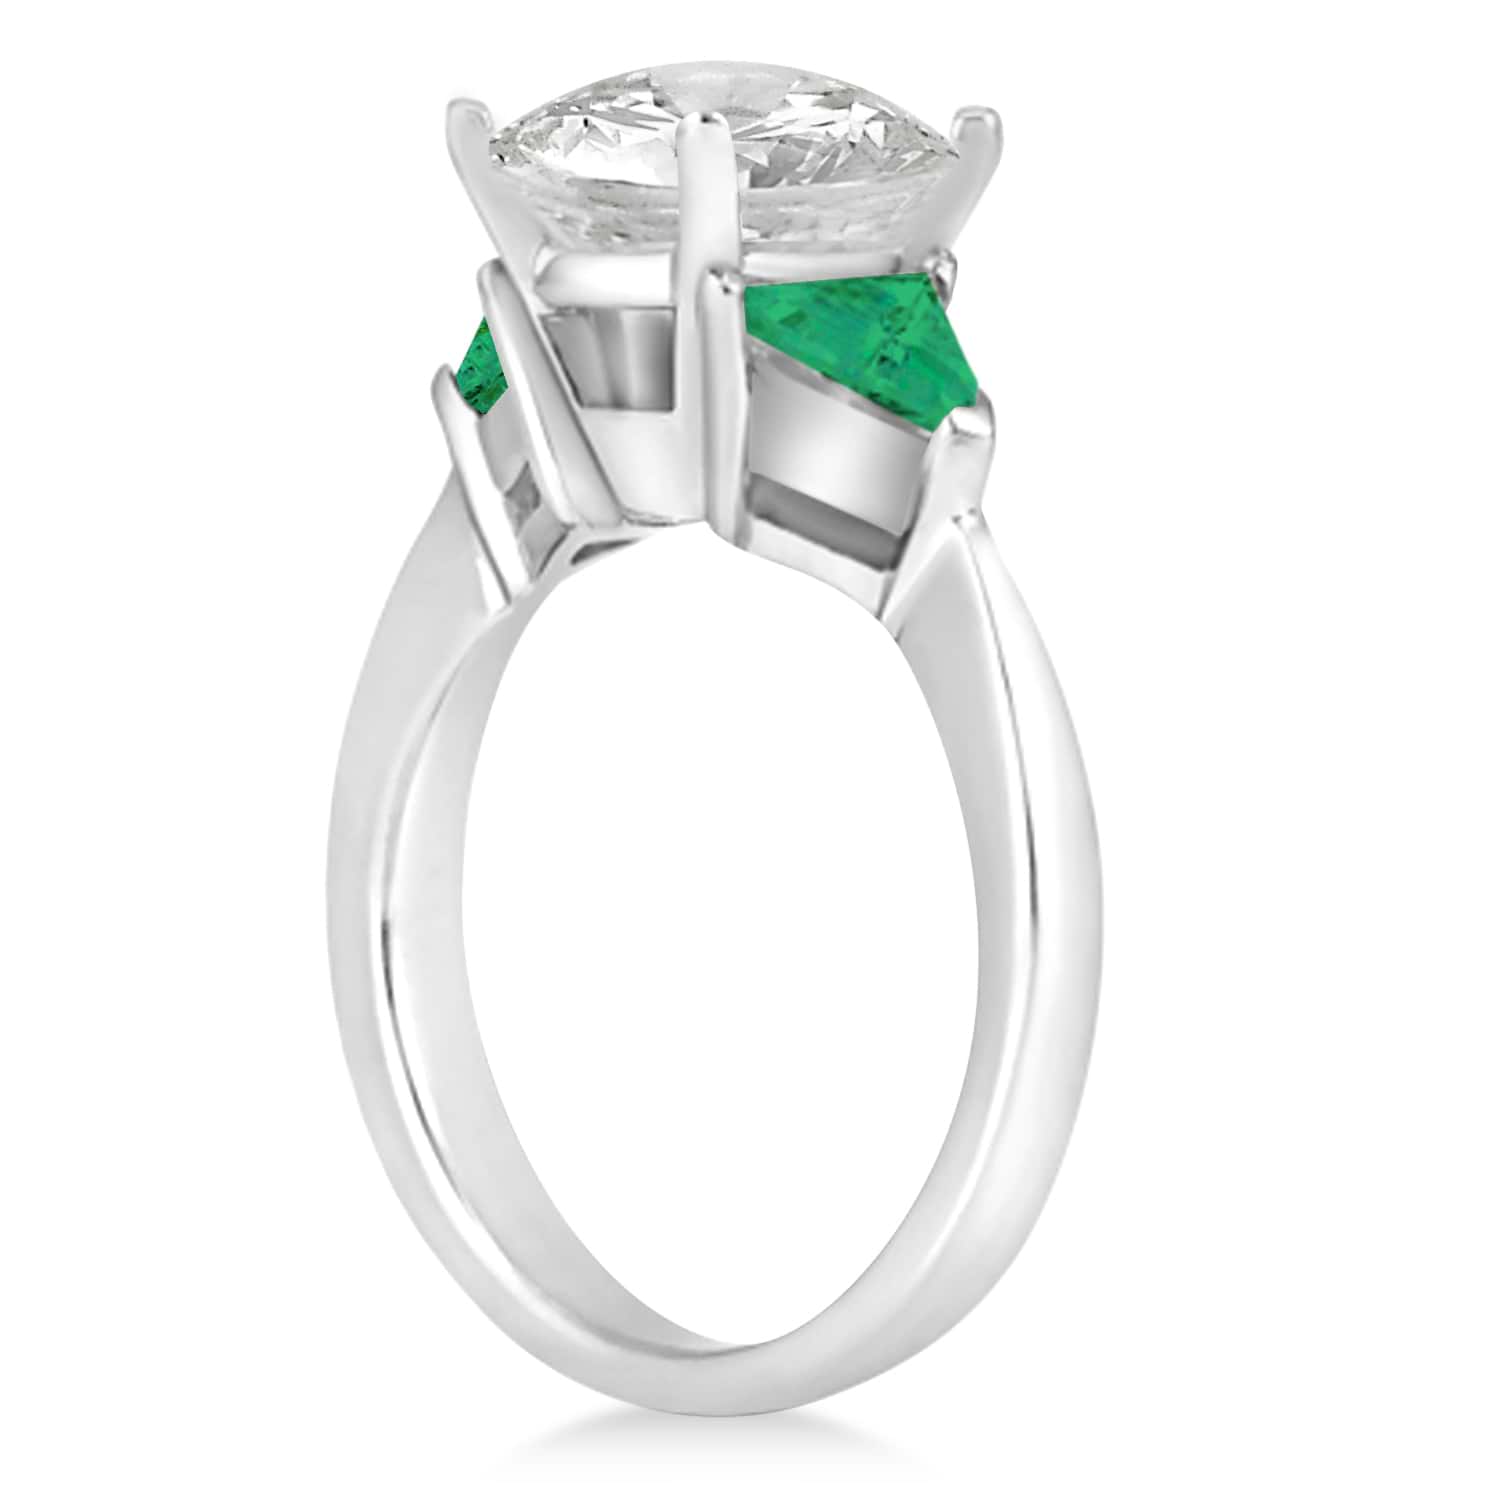 Emerald Three Stone Trilliant Engagement Ring 14k White Gold (0.70ct)